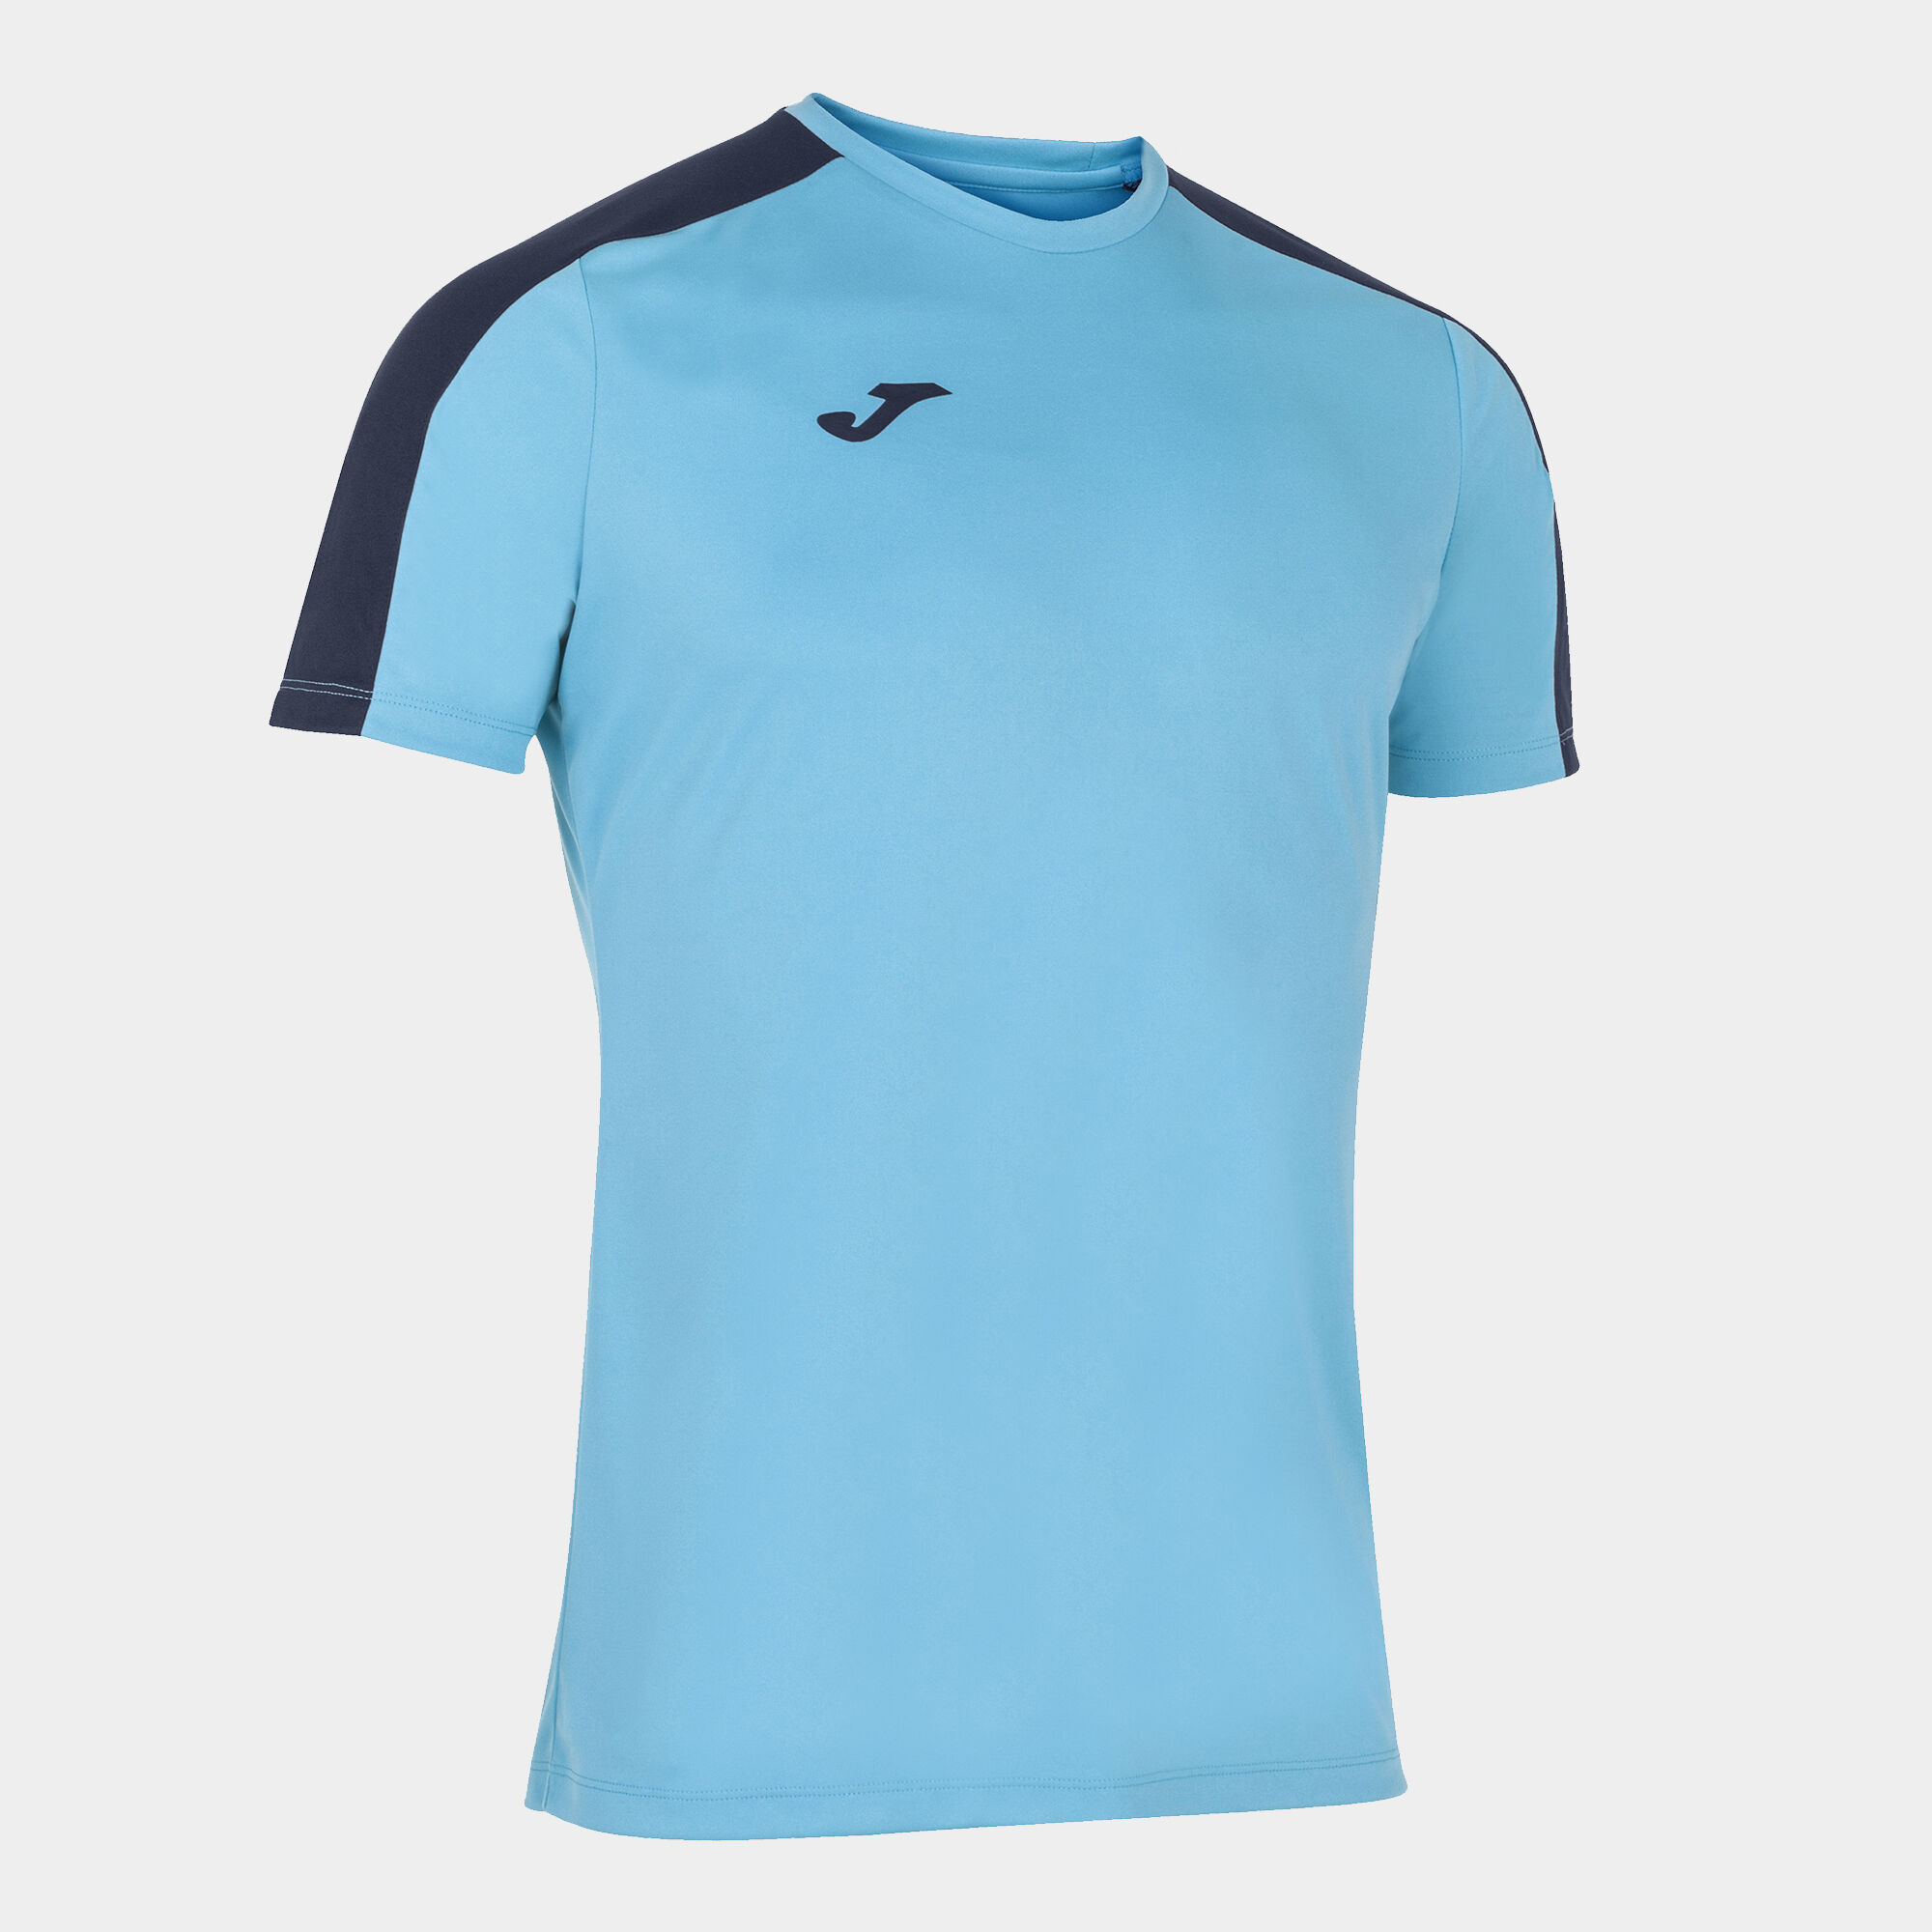 Shirt short sleeve man Academy III fluorescent turquoise navy blue